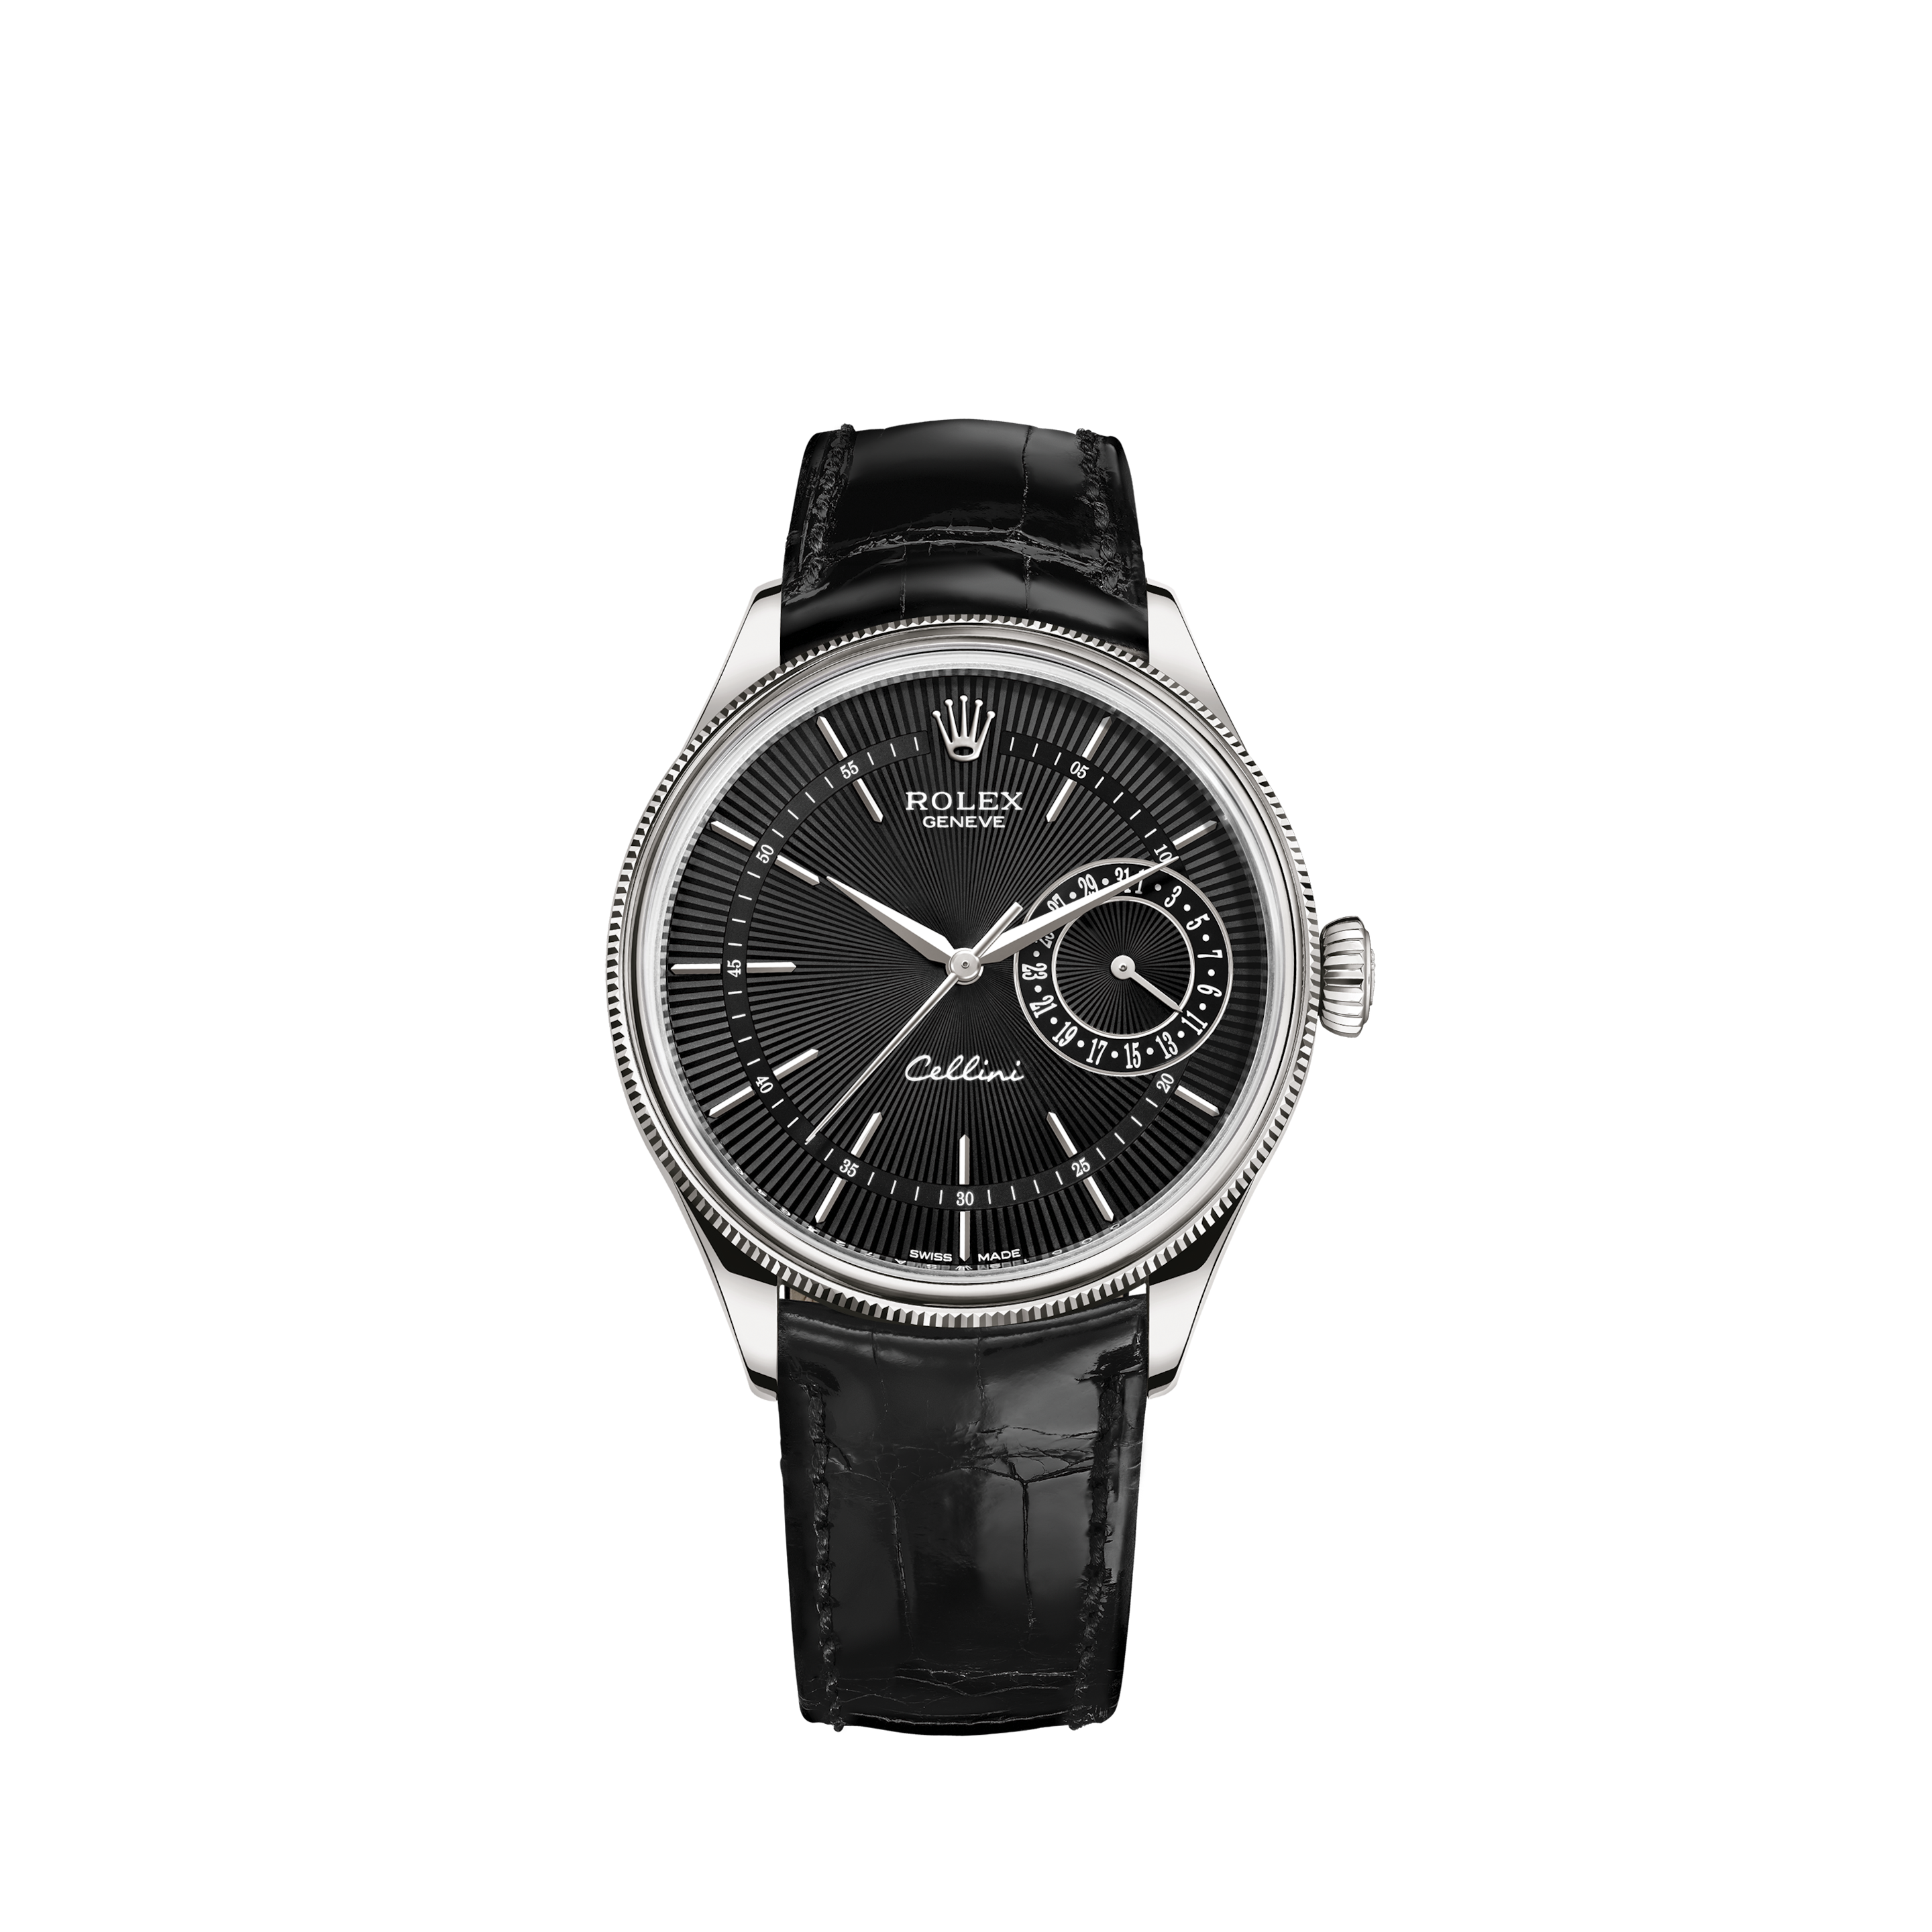 Rolex Submariner Automatic Chronometer Black Dial Men's Watch - 16610